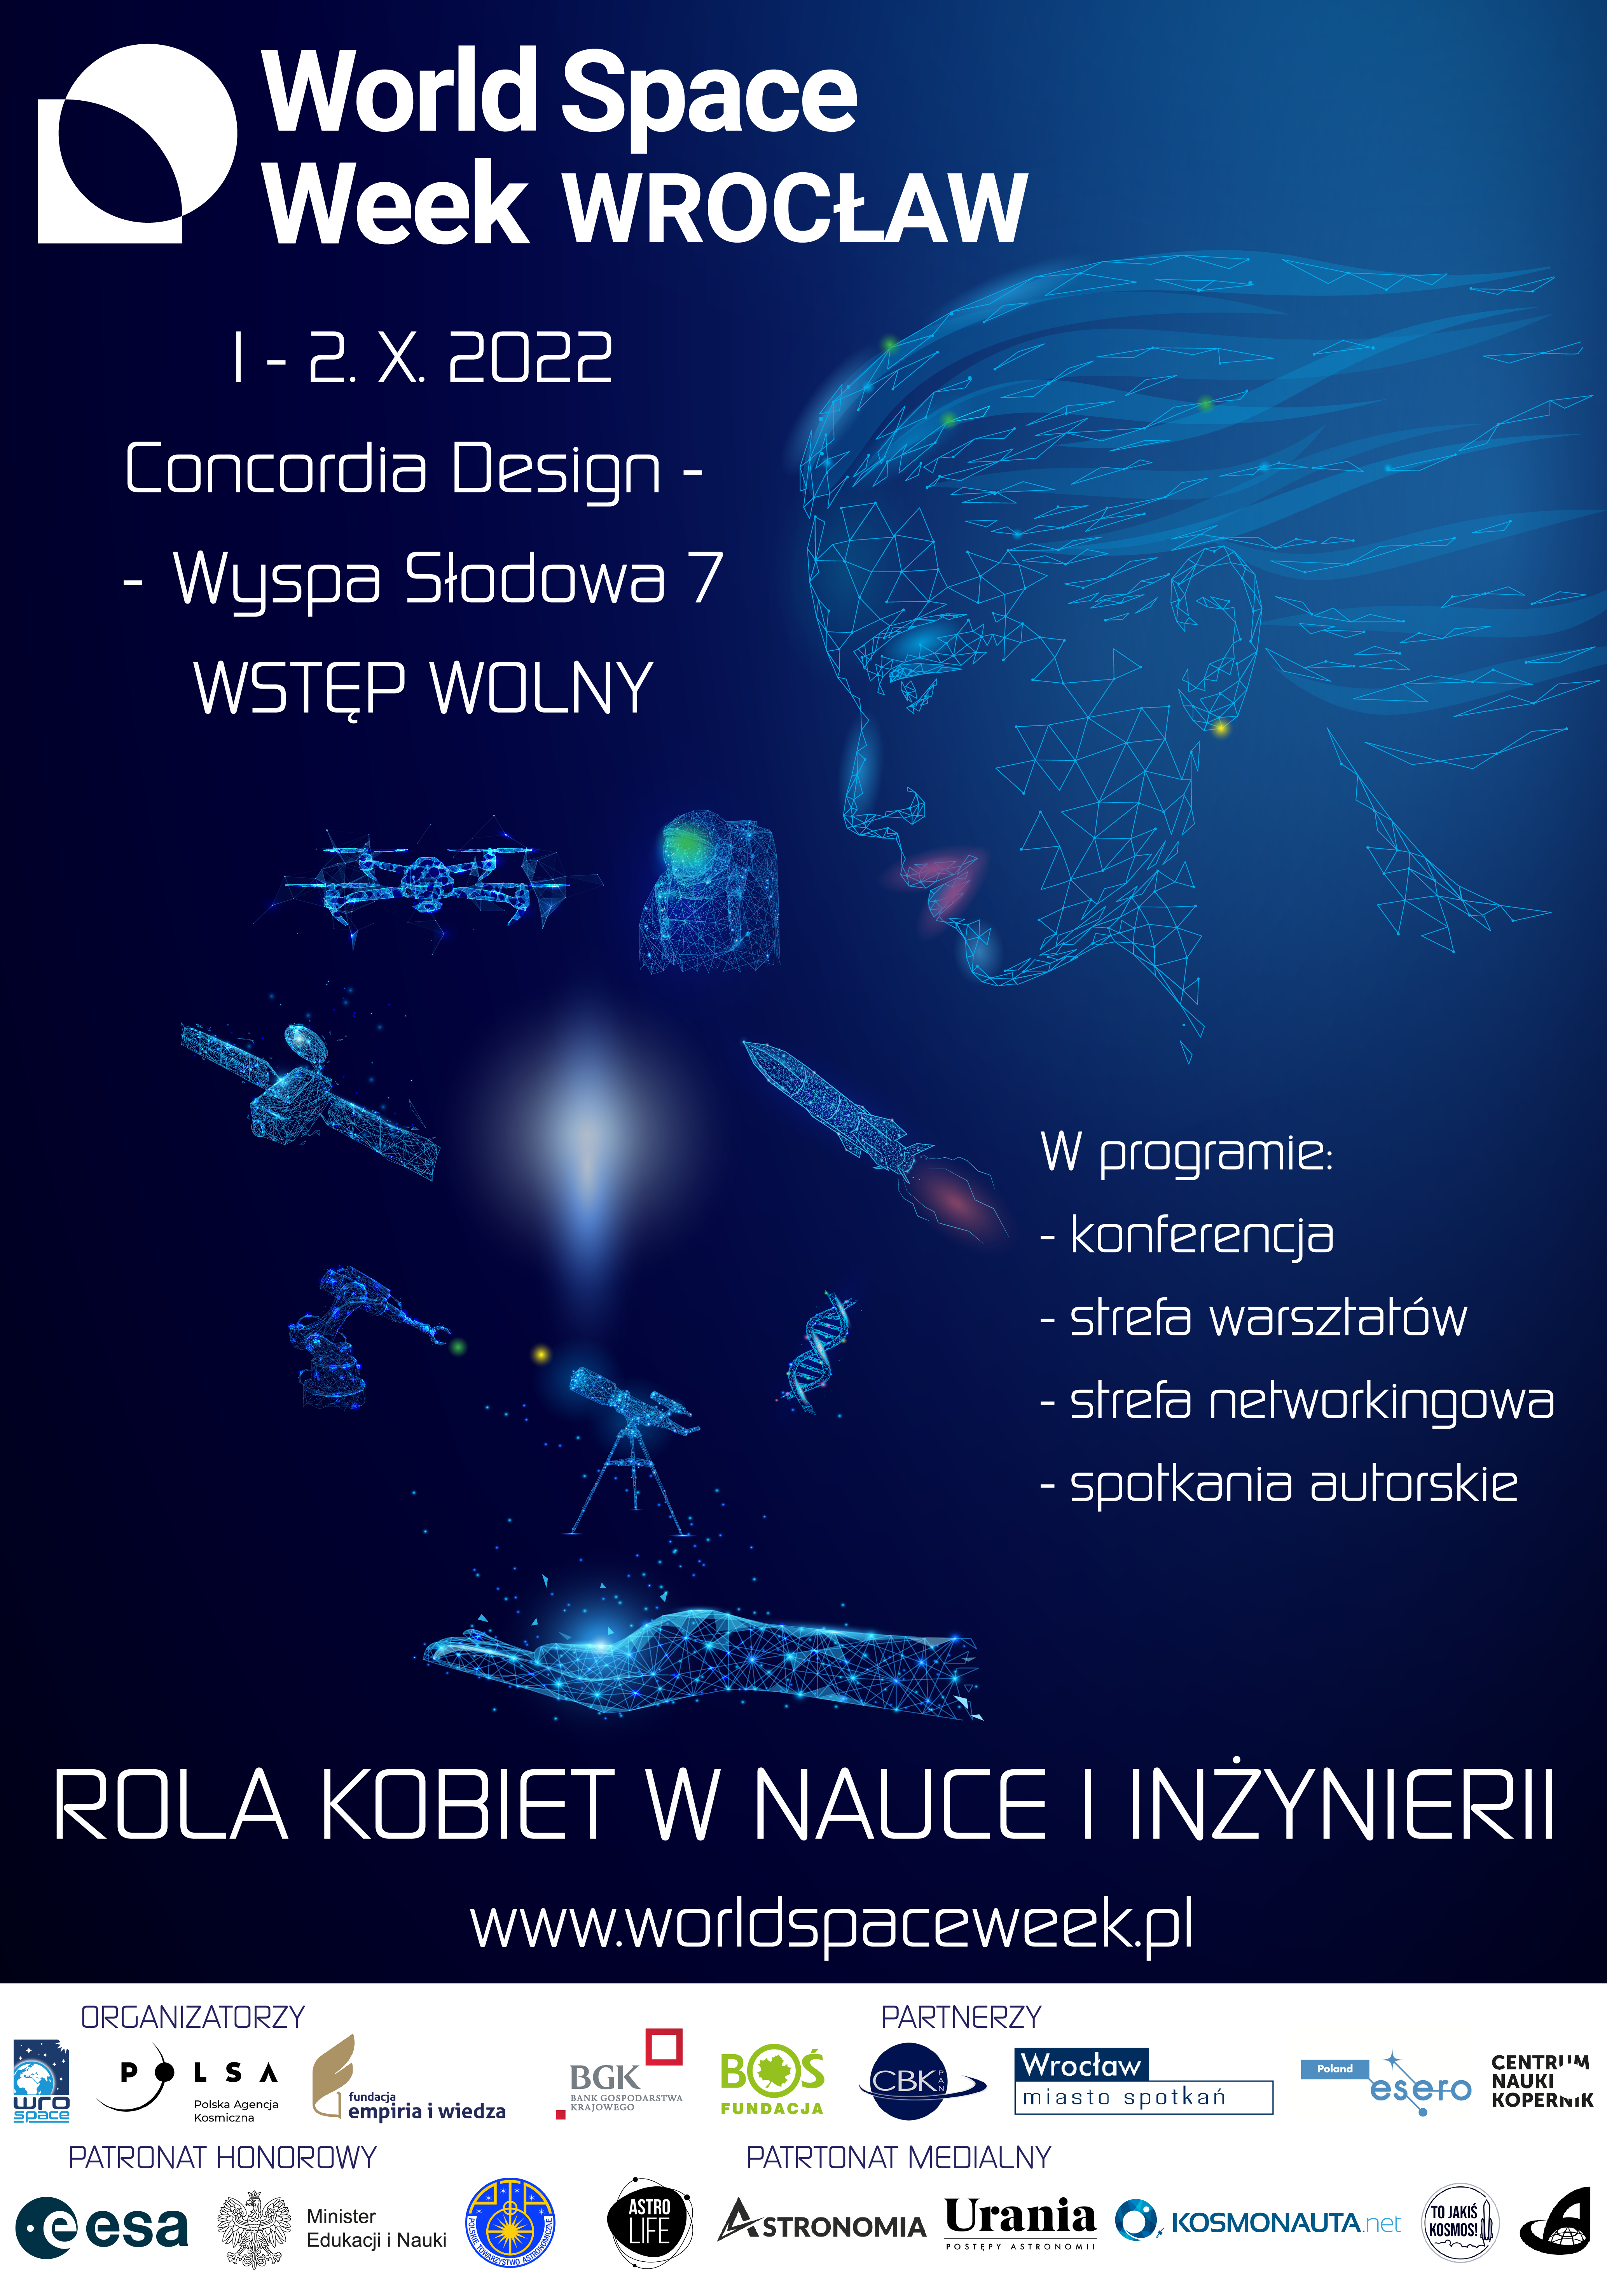 World Space Week Wrocław